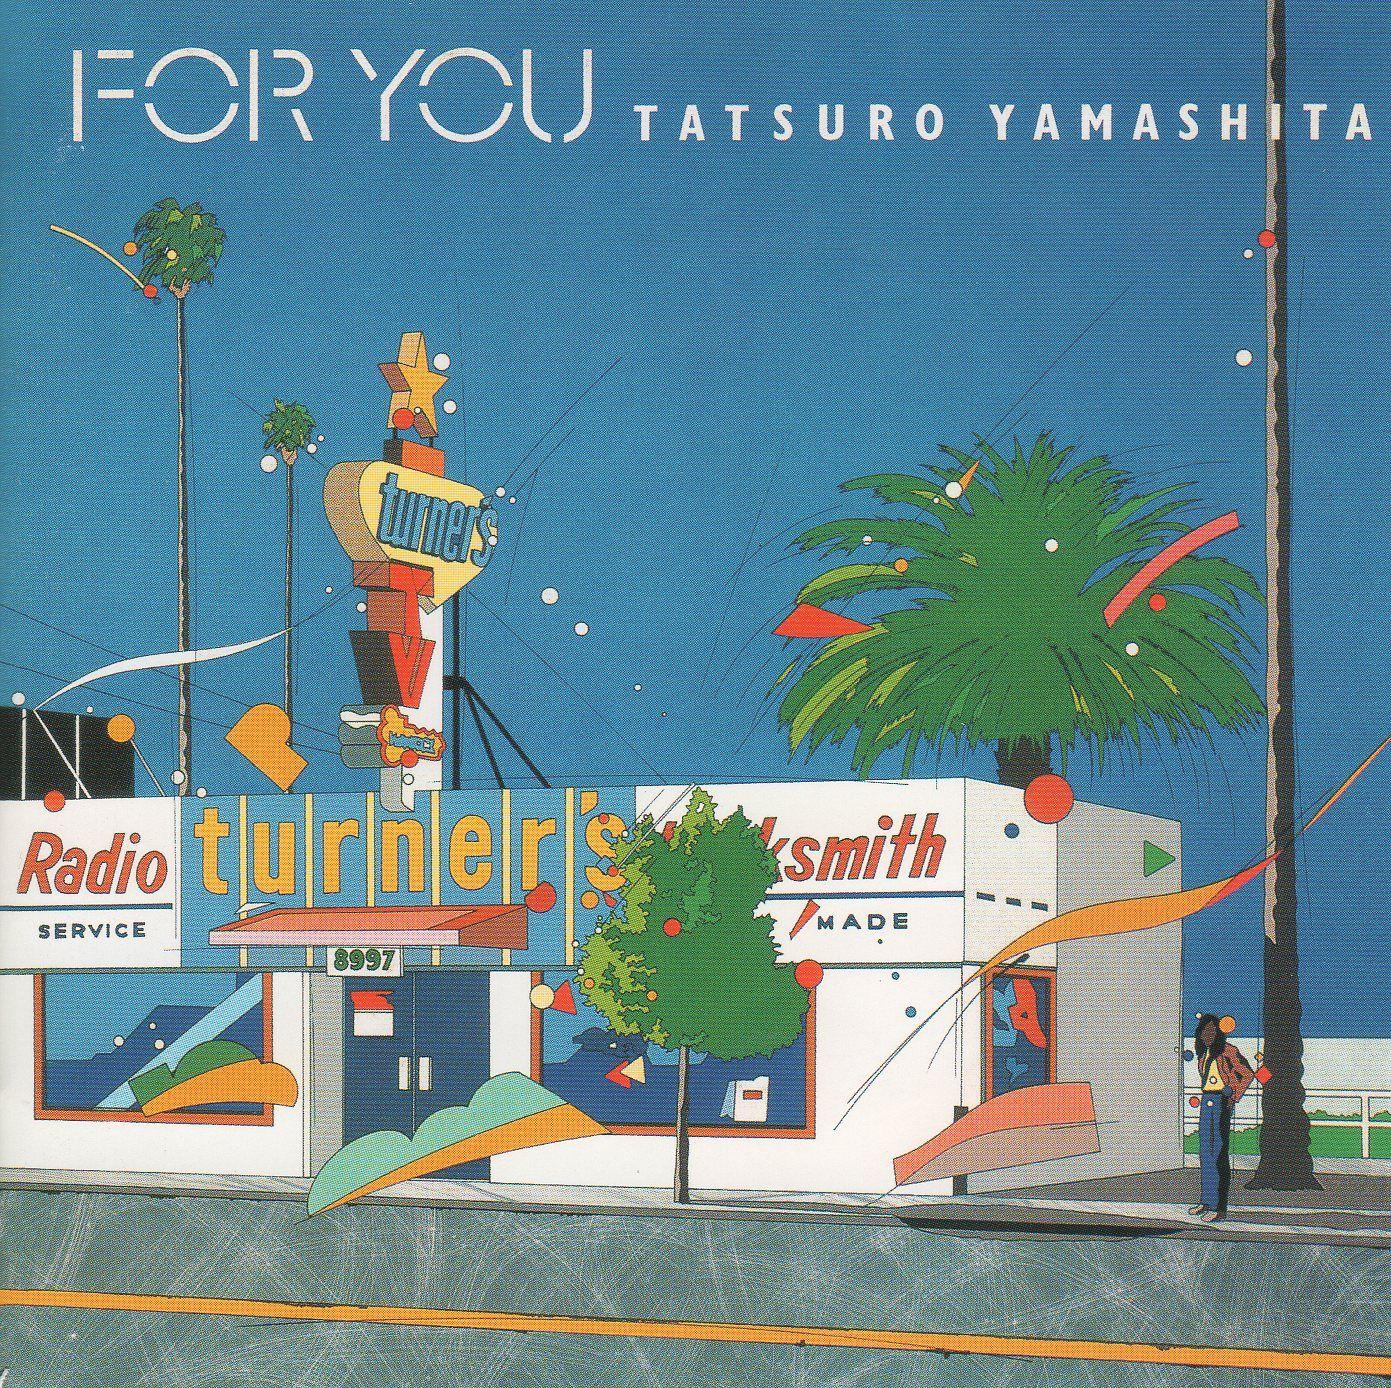 TATSURO YAMASHITA FOR YOU LP cover. Covers. Lp